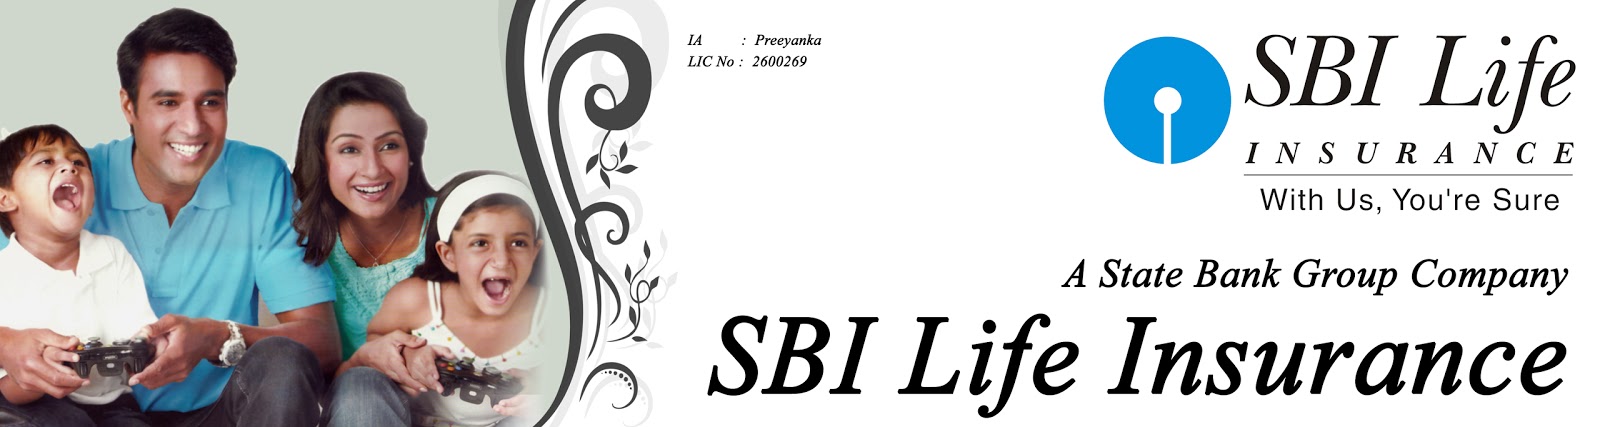 bagavathydigitals-sbi-life-insurance-board